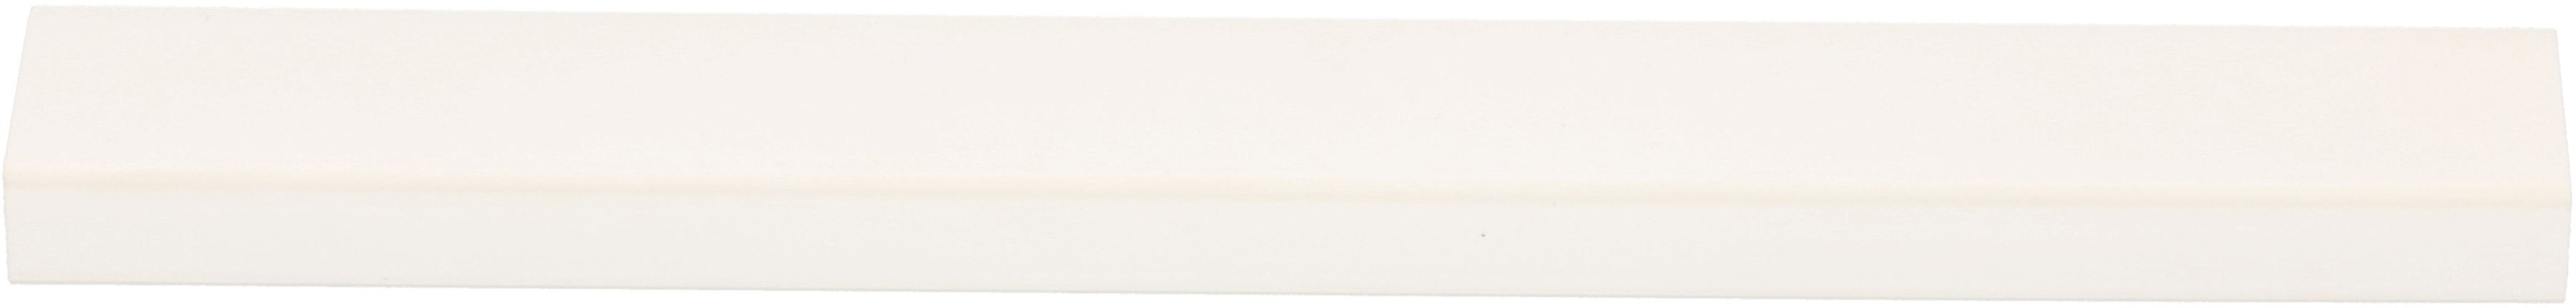 Goulotte 21x11.5mm blanc 2m